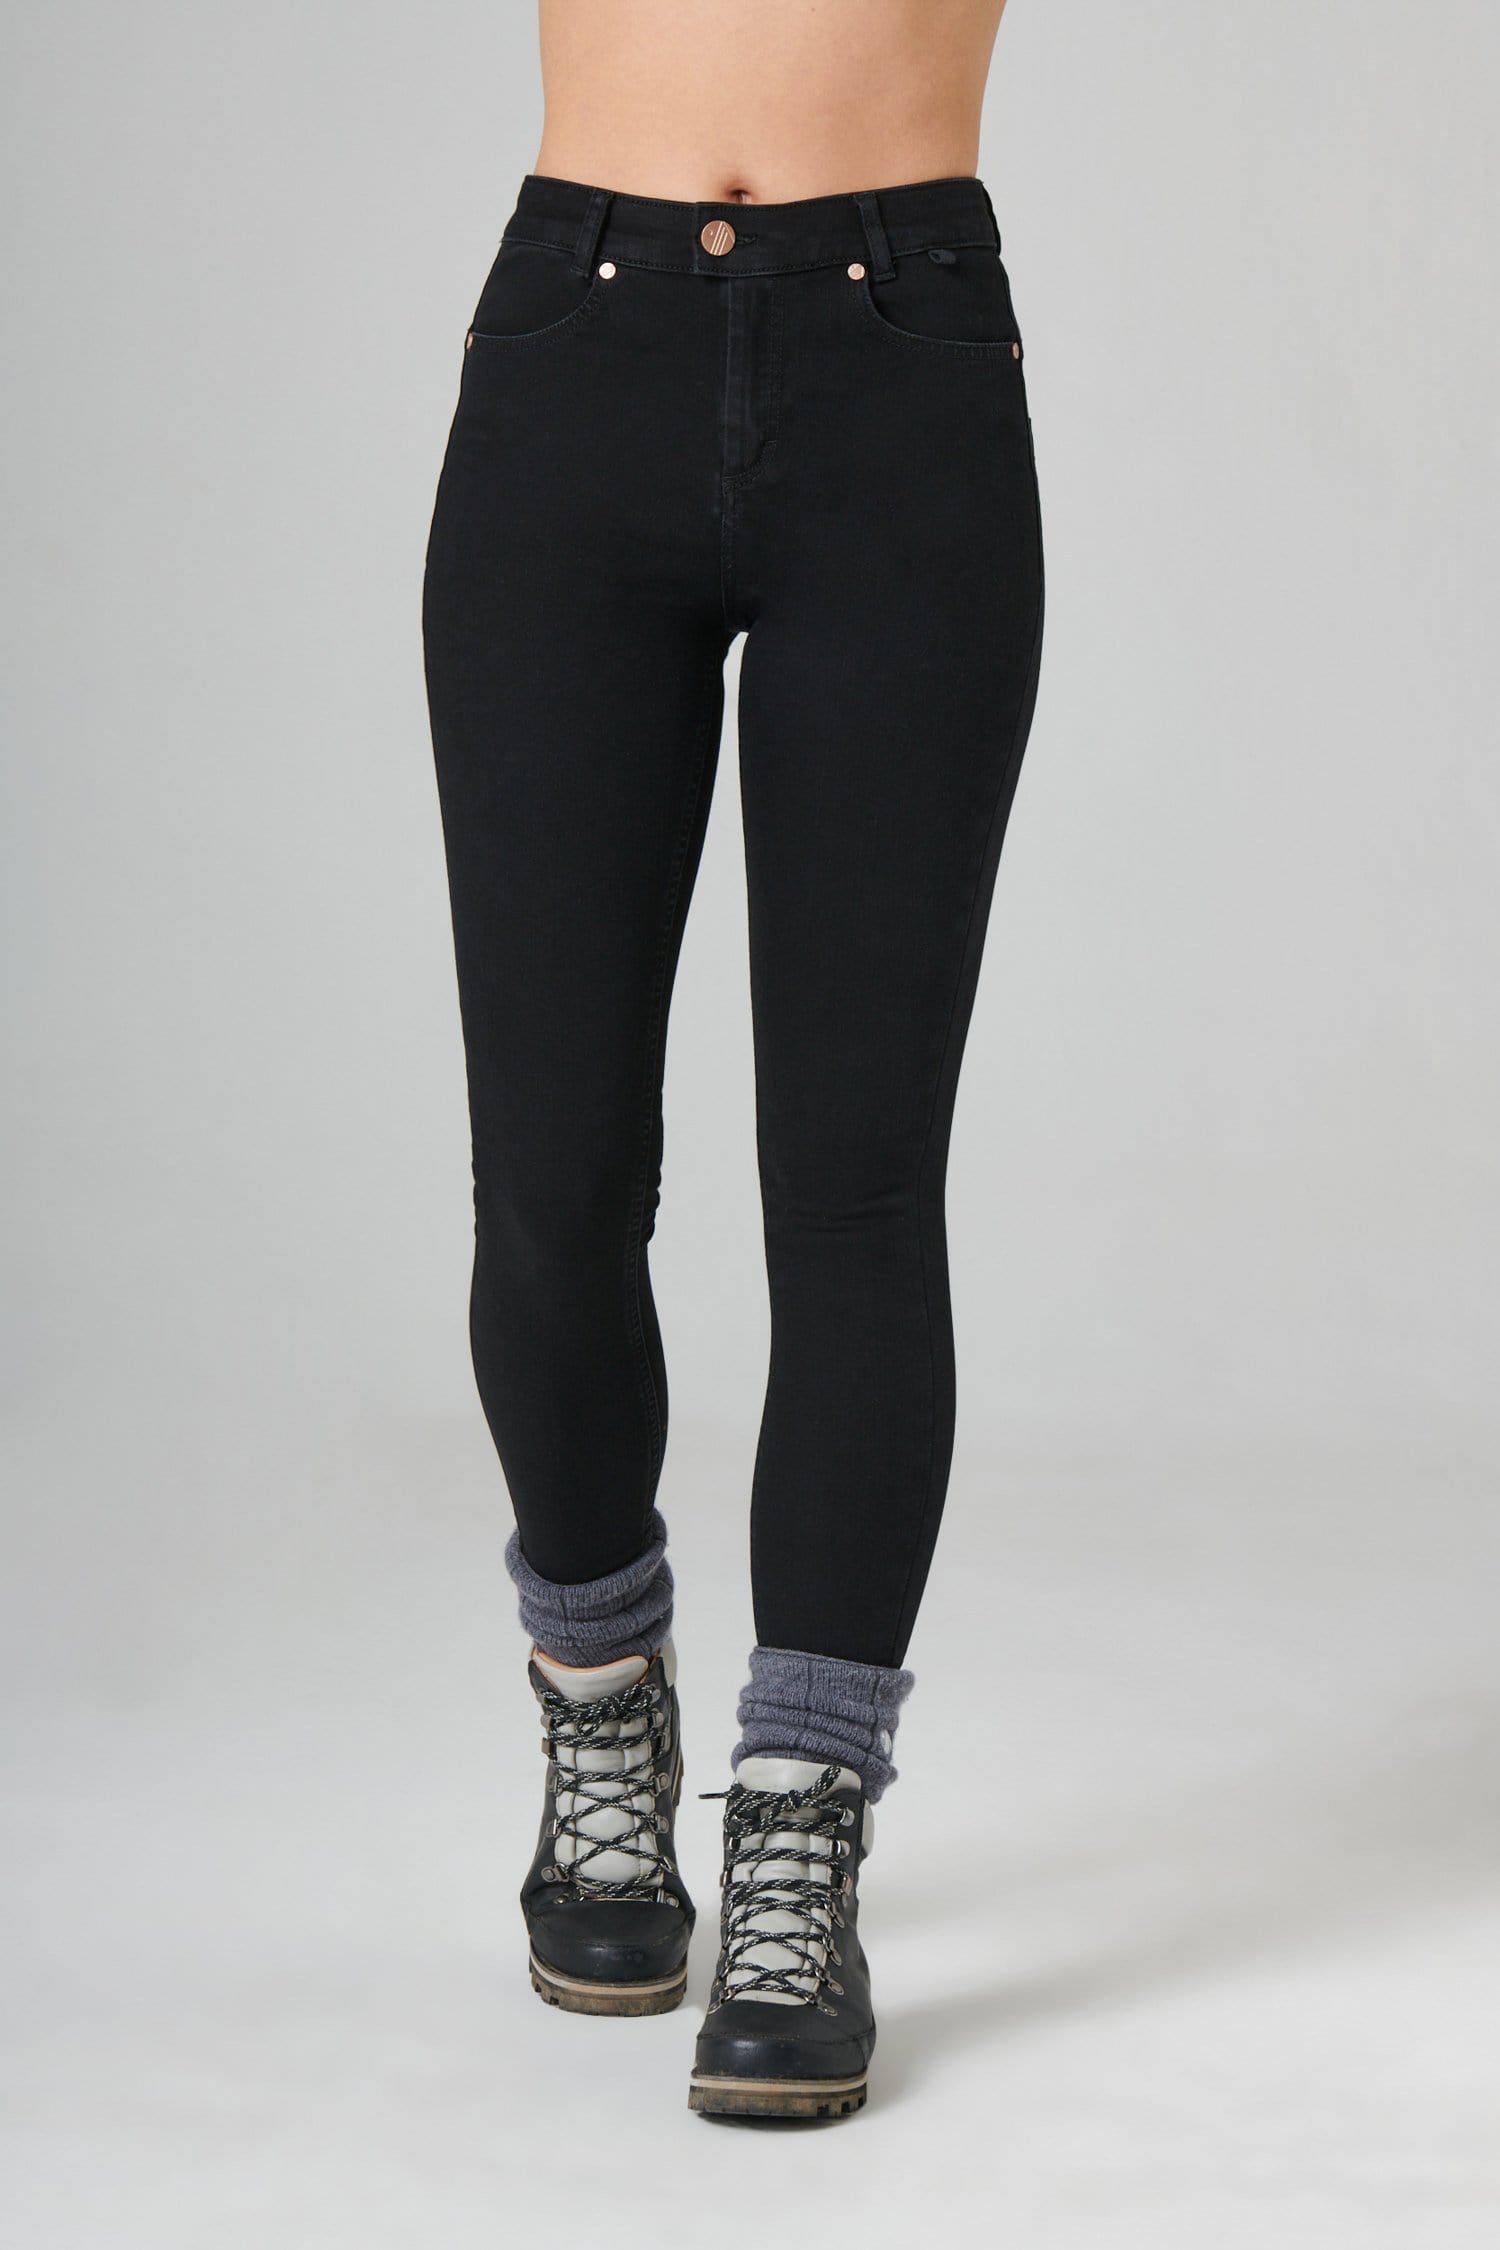 The Skinny Outdoor Jeans - Black Denim - 28p / Uk10 - Womens - Acai Outdoorwear